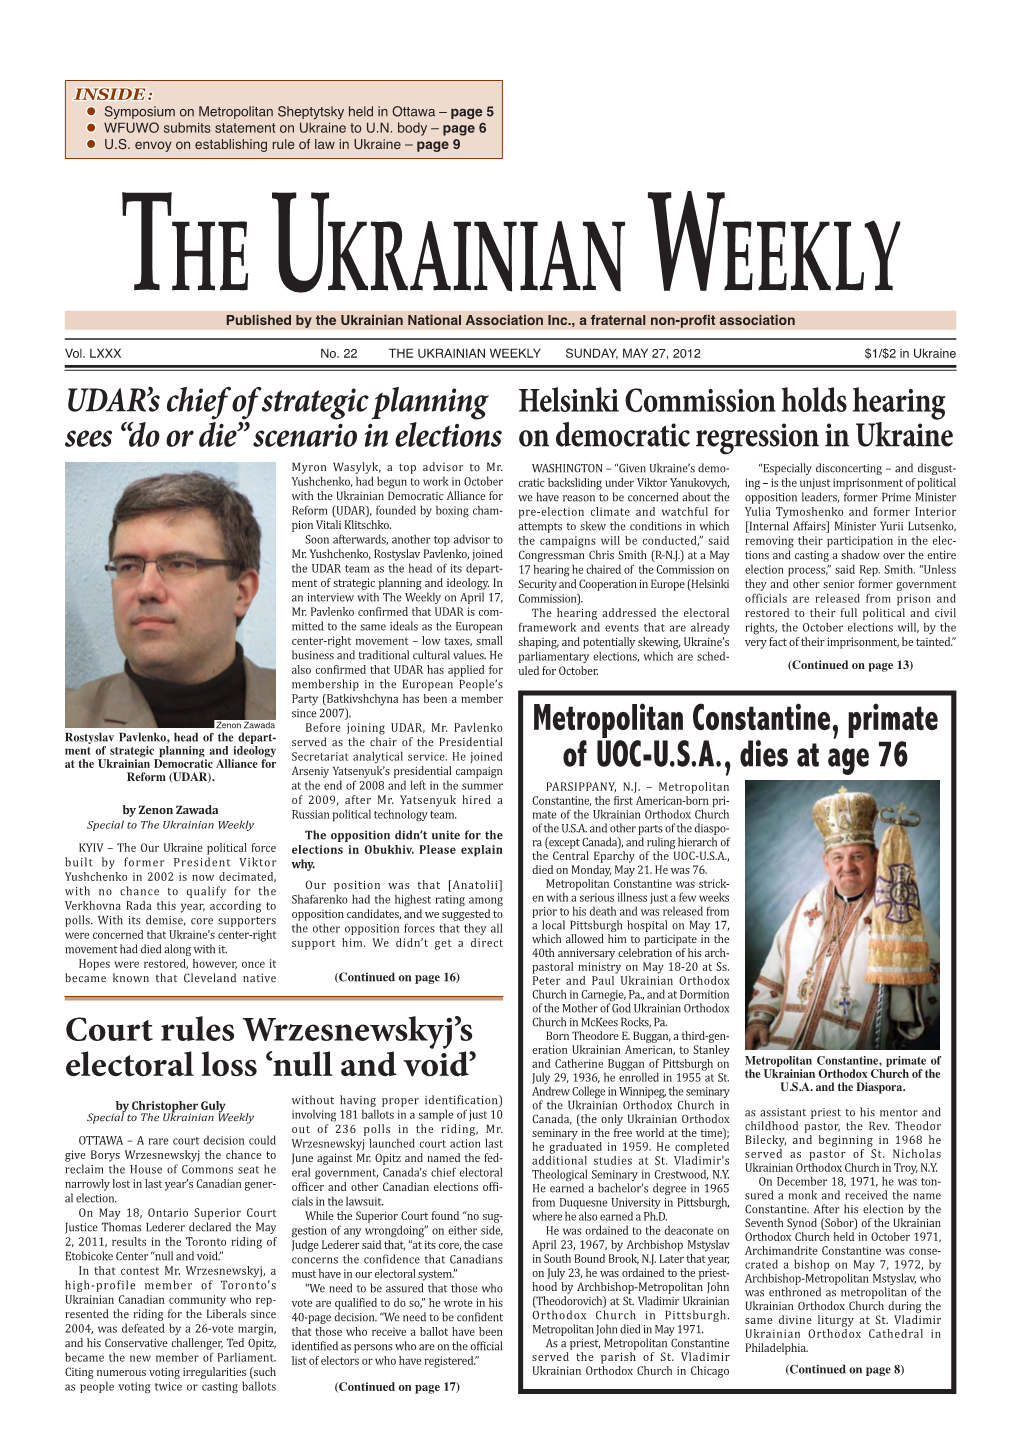 The Ukrainian Weekly 2012, No.22